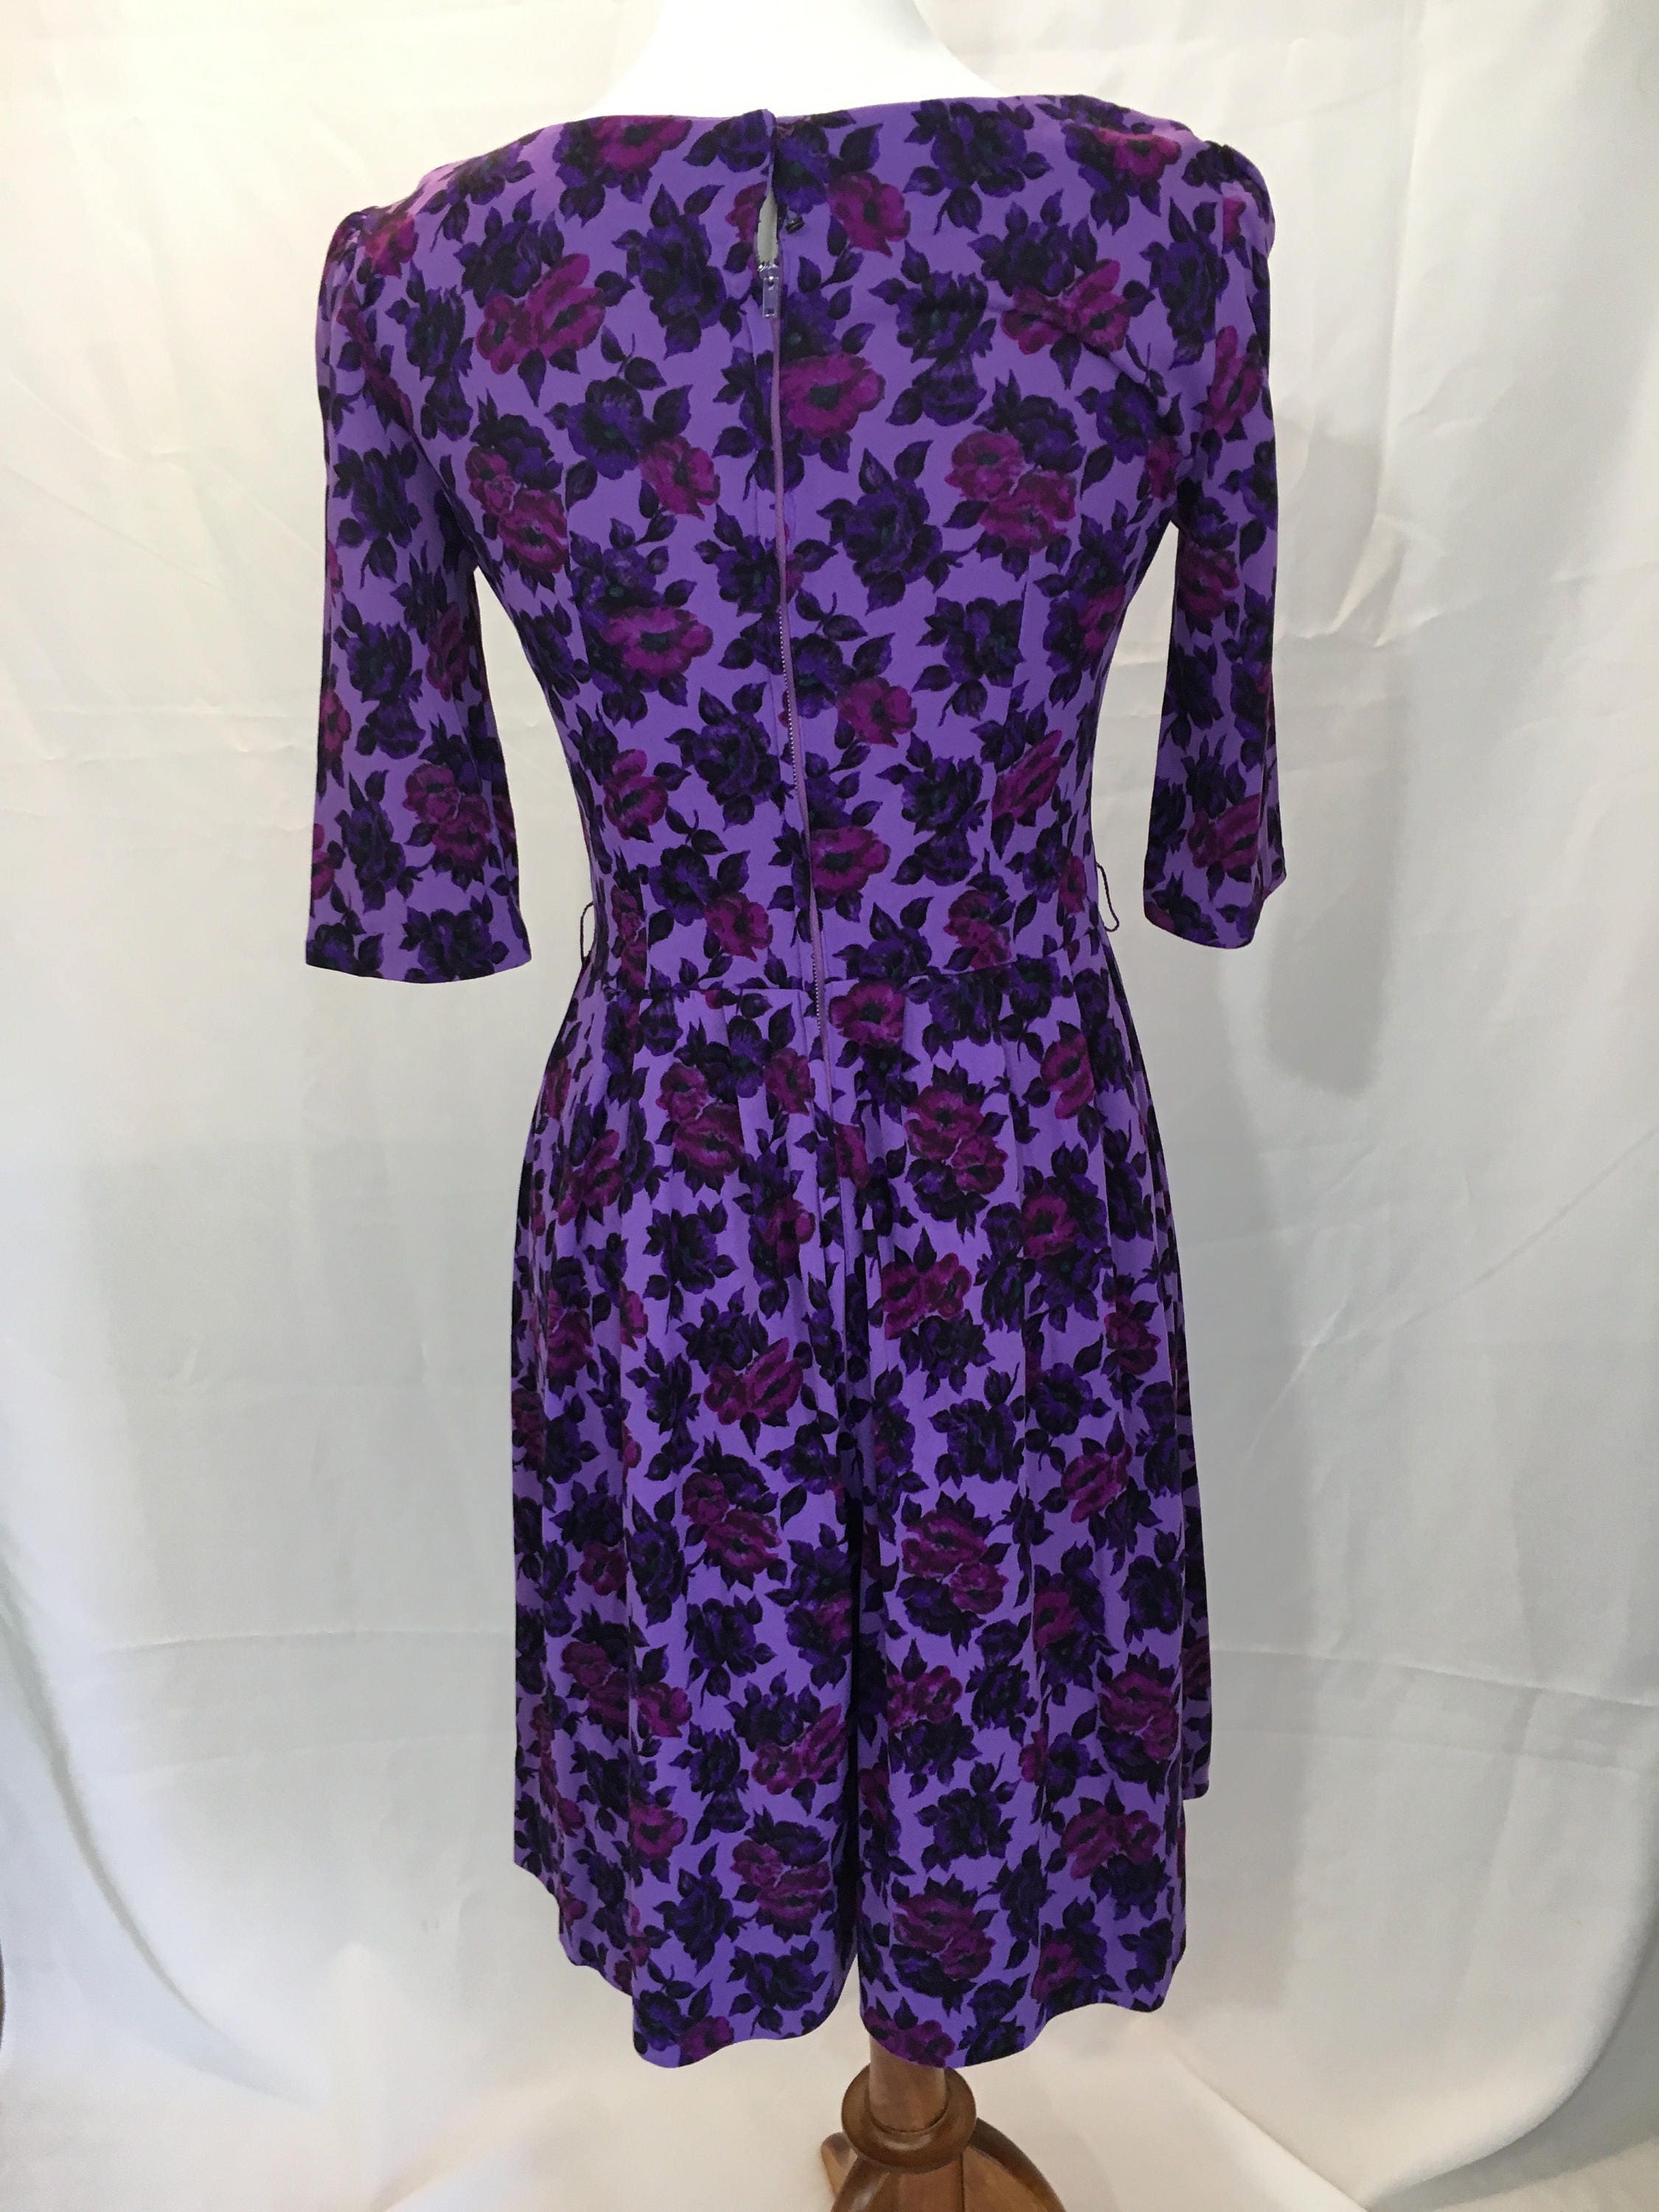 50's/60's Rich Violet Floral Dress | Etsy